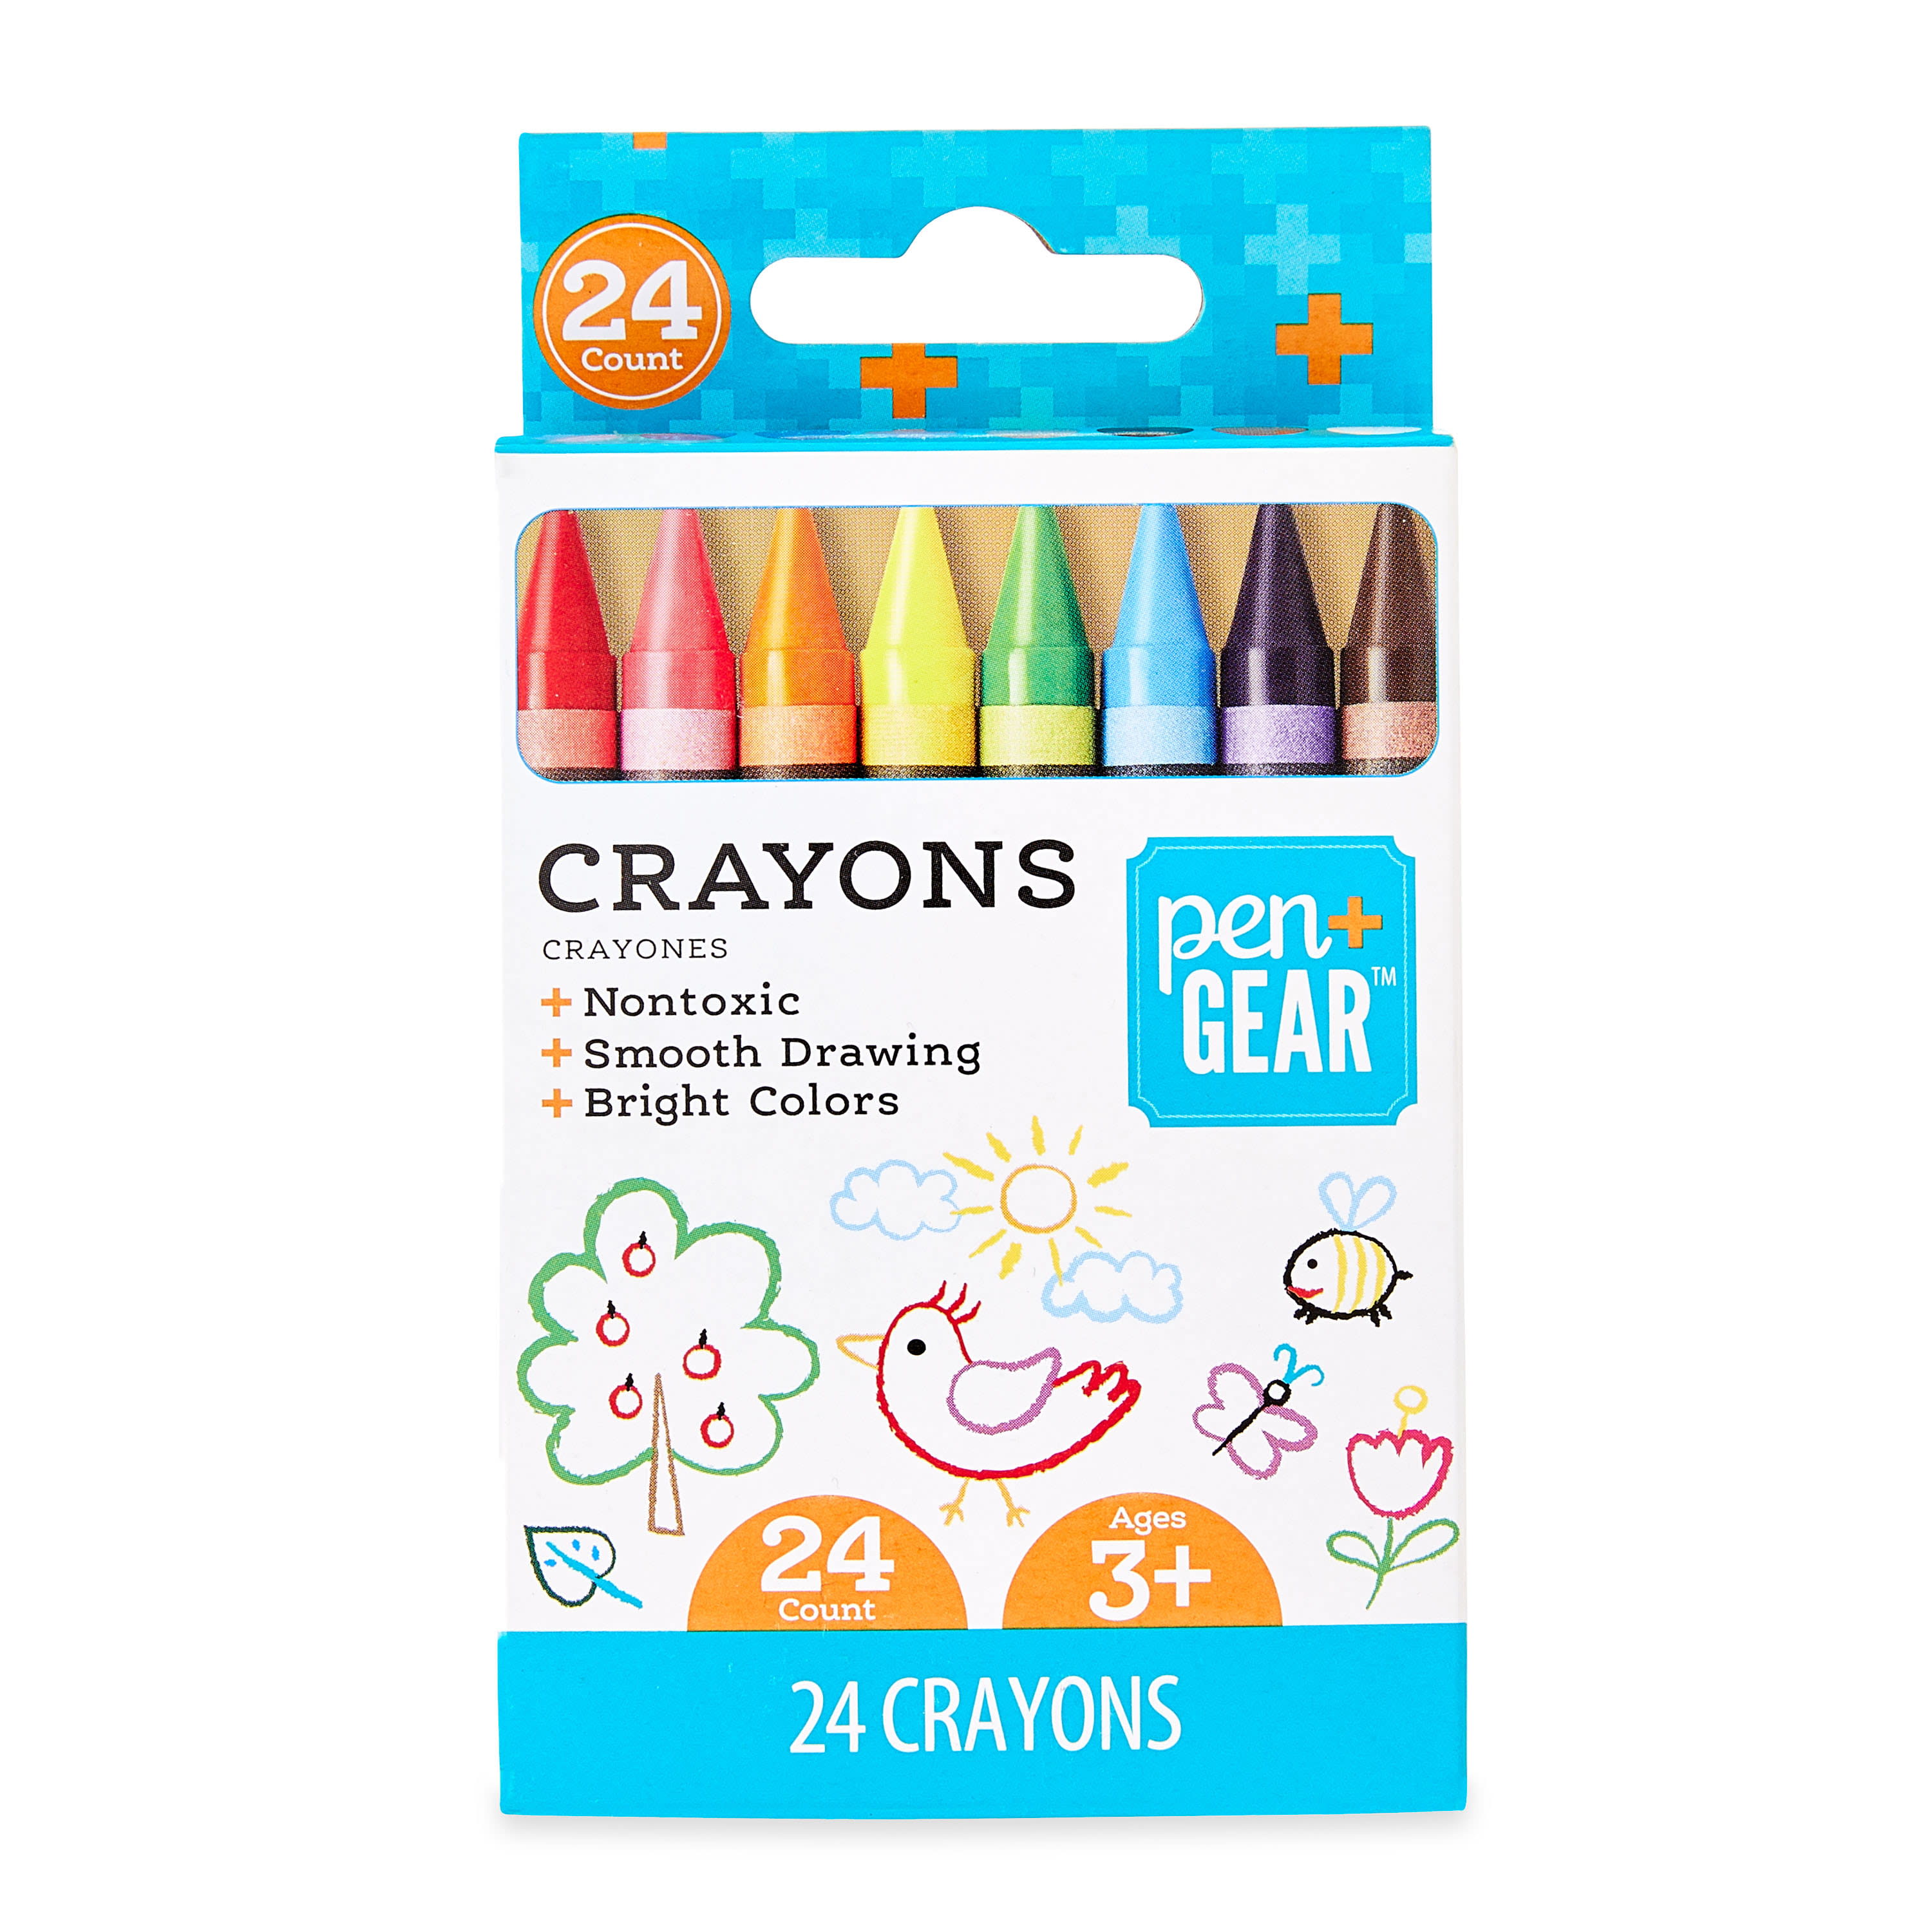 Crayola Giant Box of Crayons, School Supplies, 120 Pieces